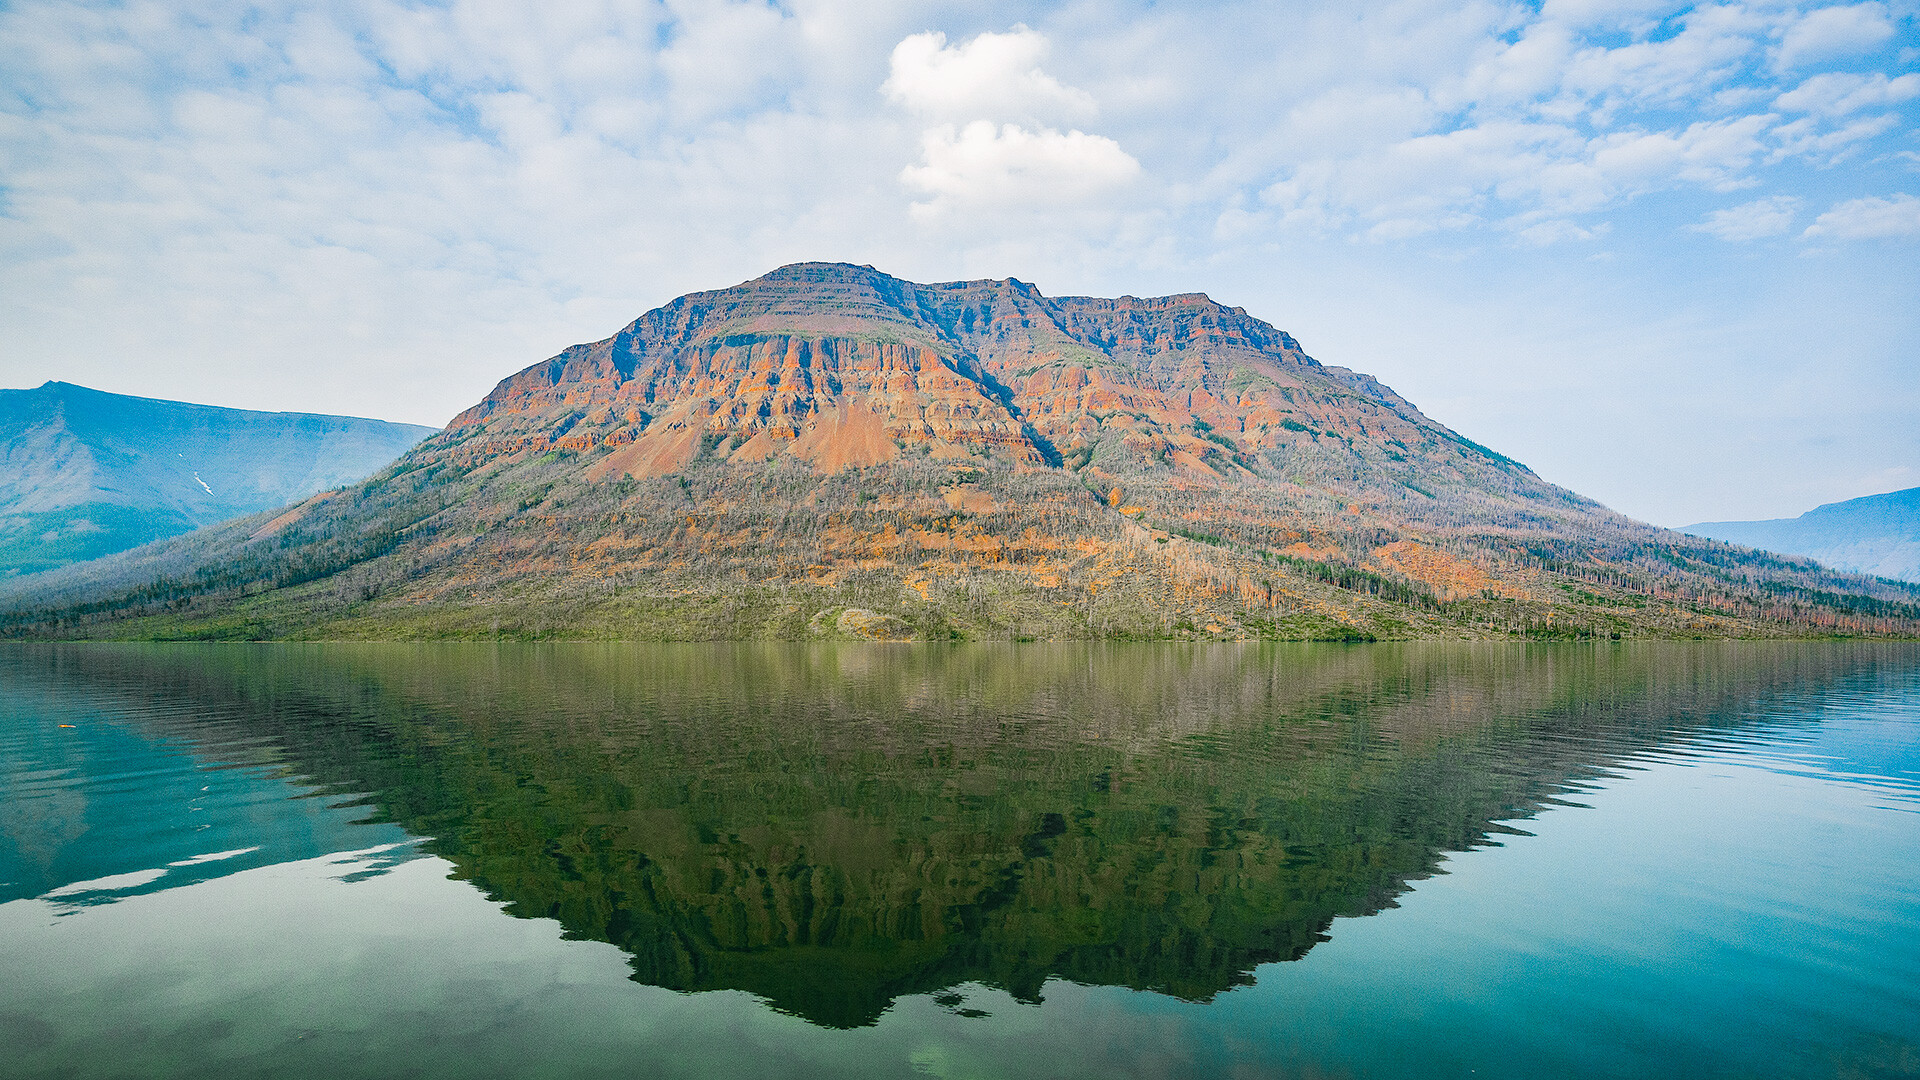 Shaitan Mountain on the Lama Lake.